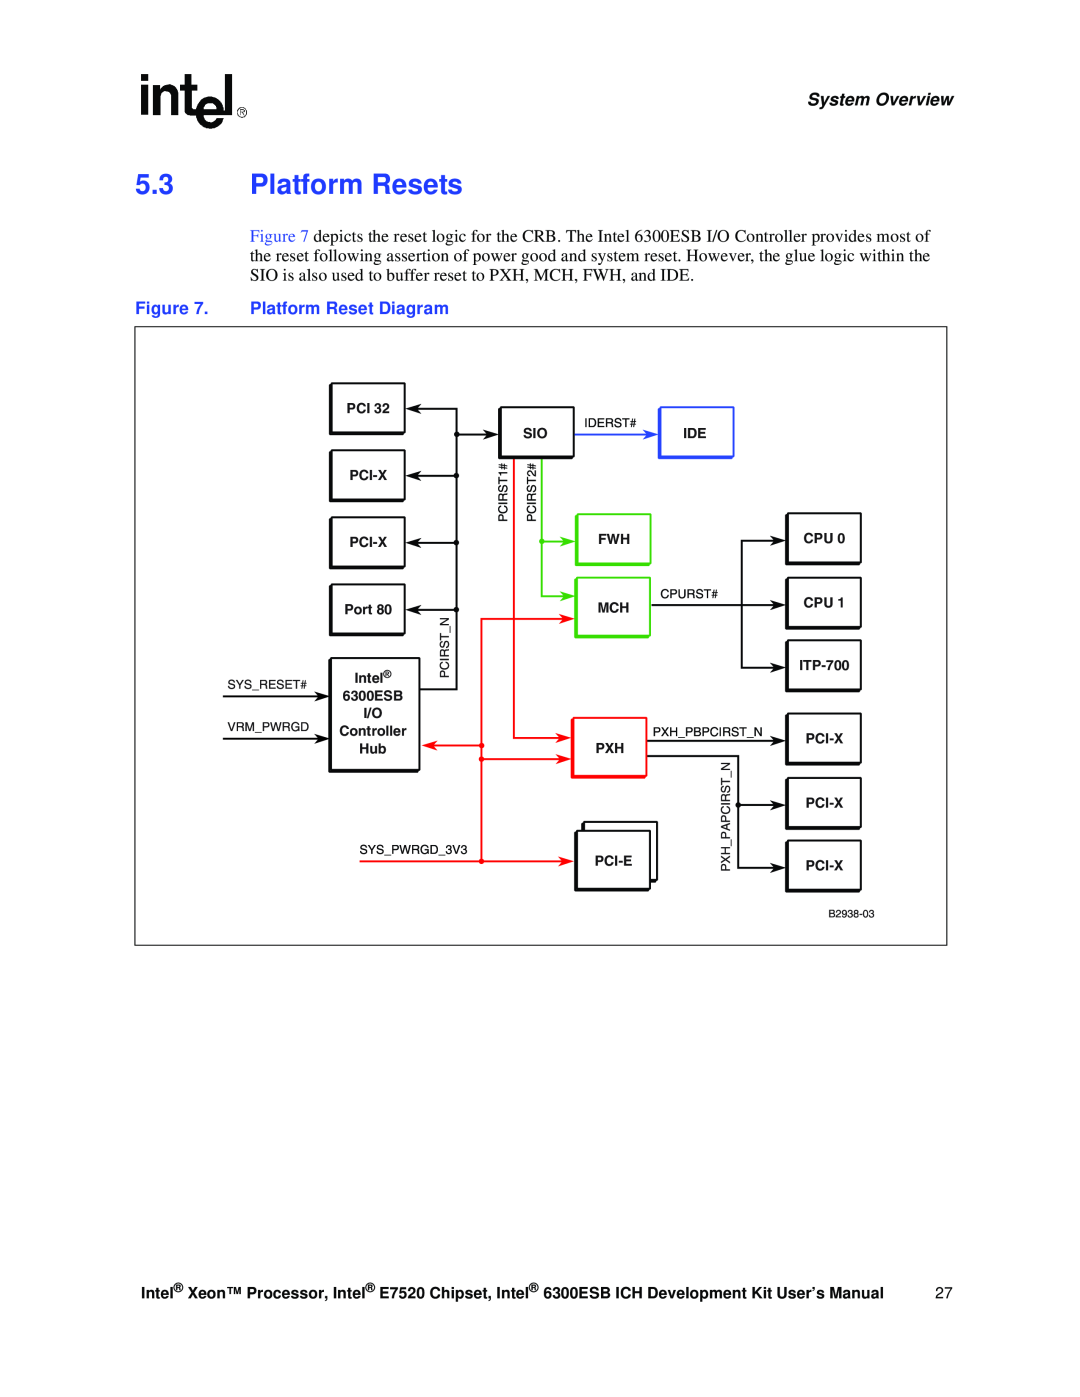 Intel 6300ESB ICH, Xeon user manual Platform Resets, Platform Reset Diagram, Pci -E, System Overview 